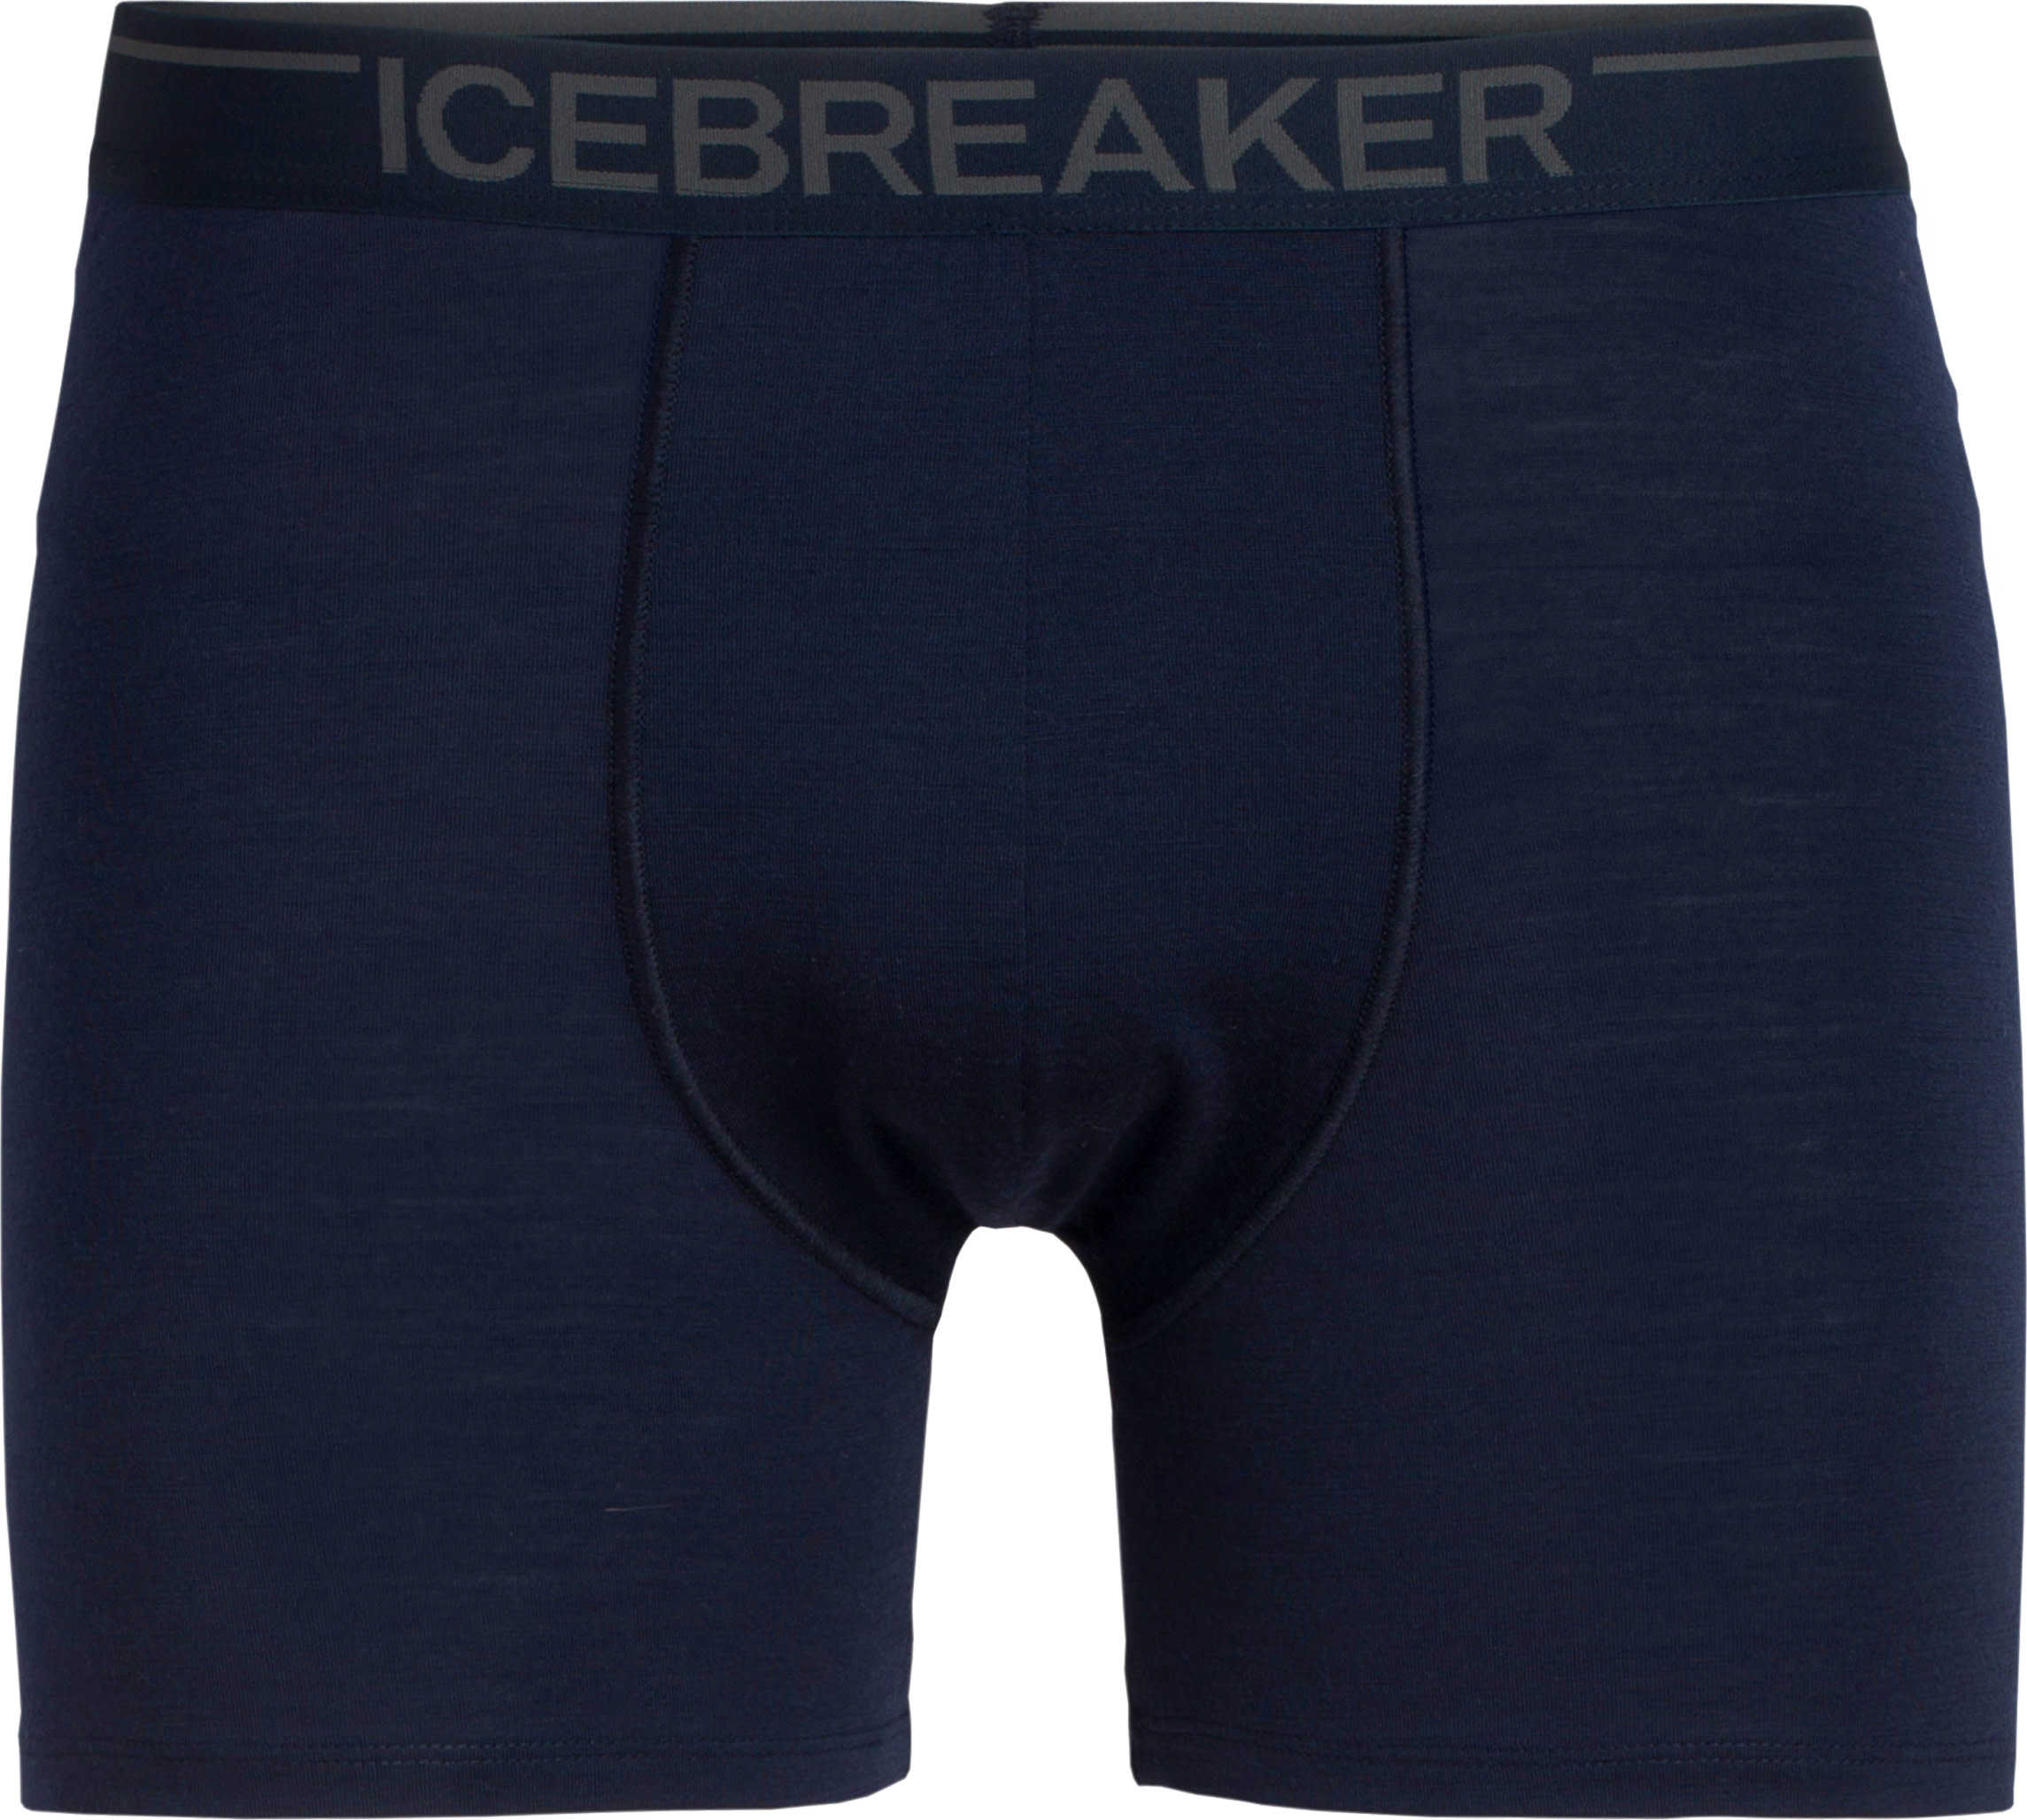 Icebreaker Men’s Anatomica Boxers Midnight Navy